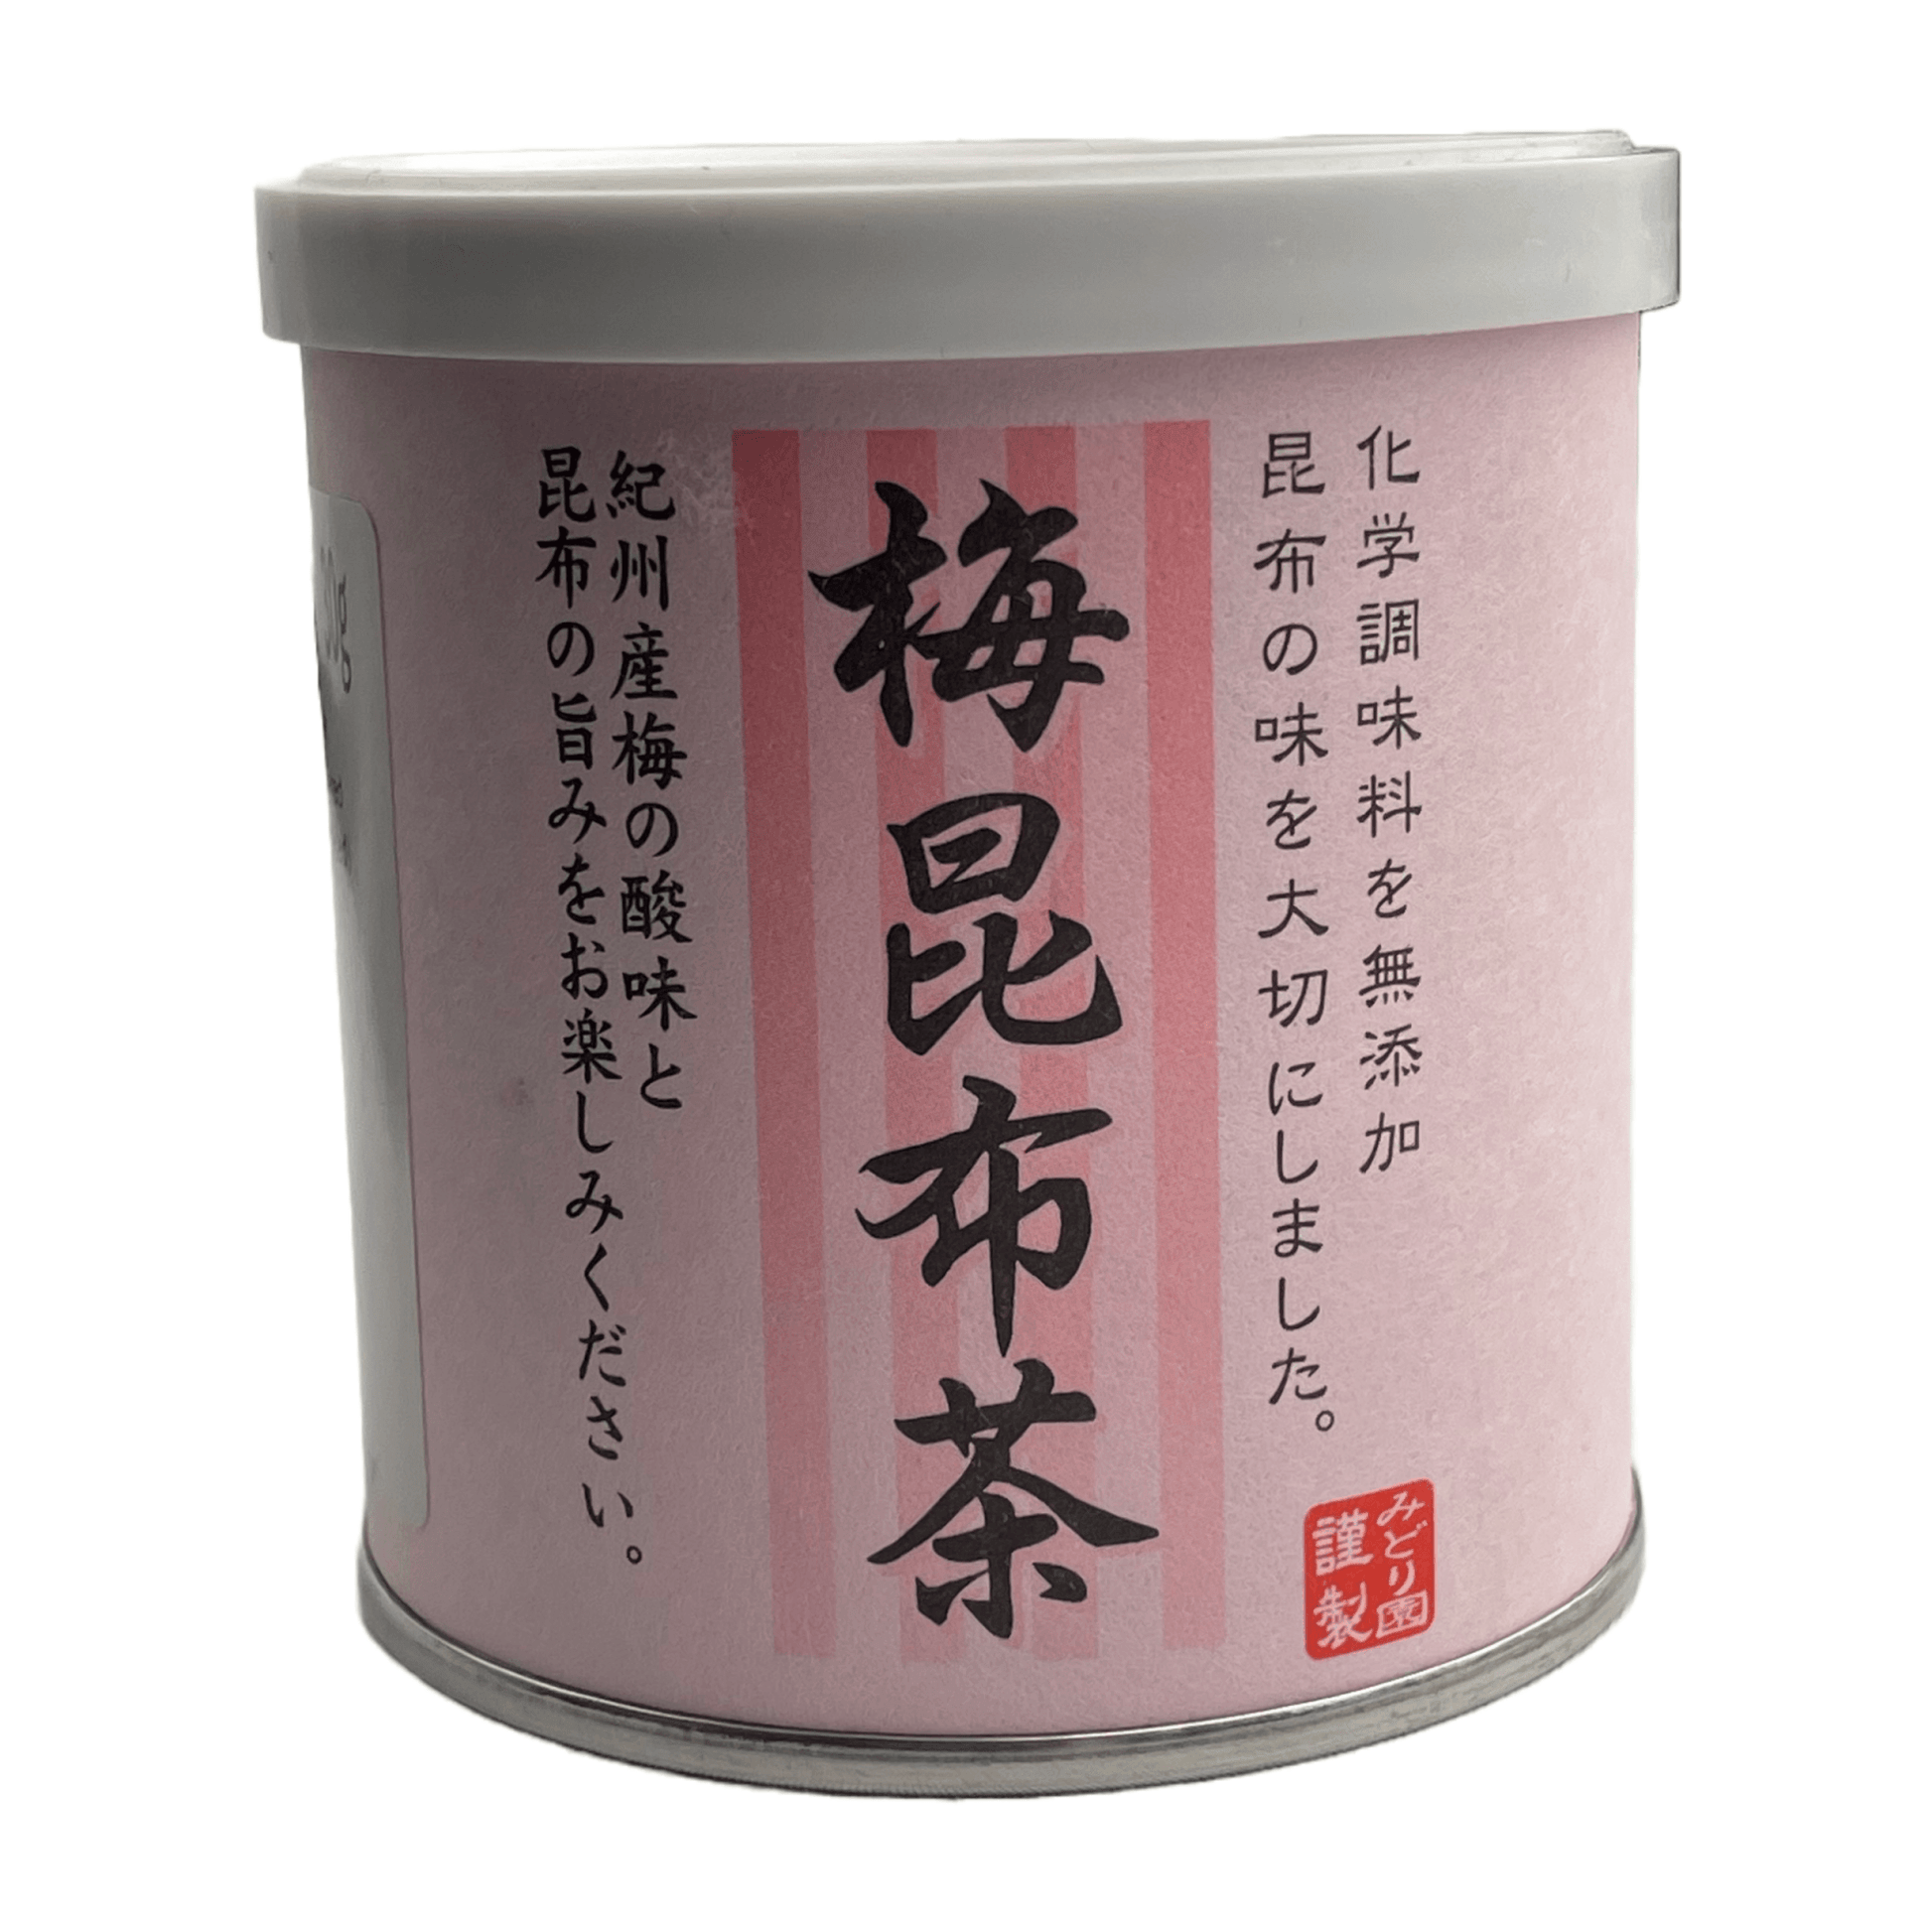 Midorien Plum Kelp Tea 30g / みどり園 梅昆布茶 30g - RiceWineShop